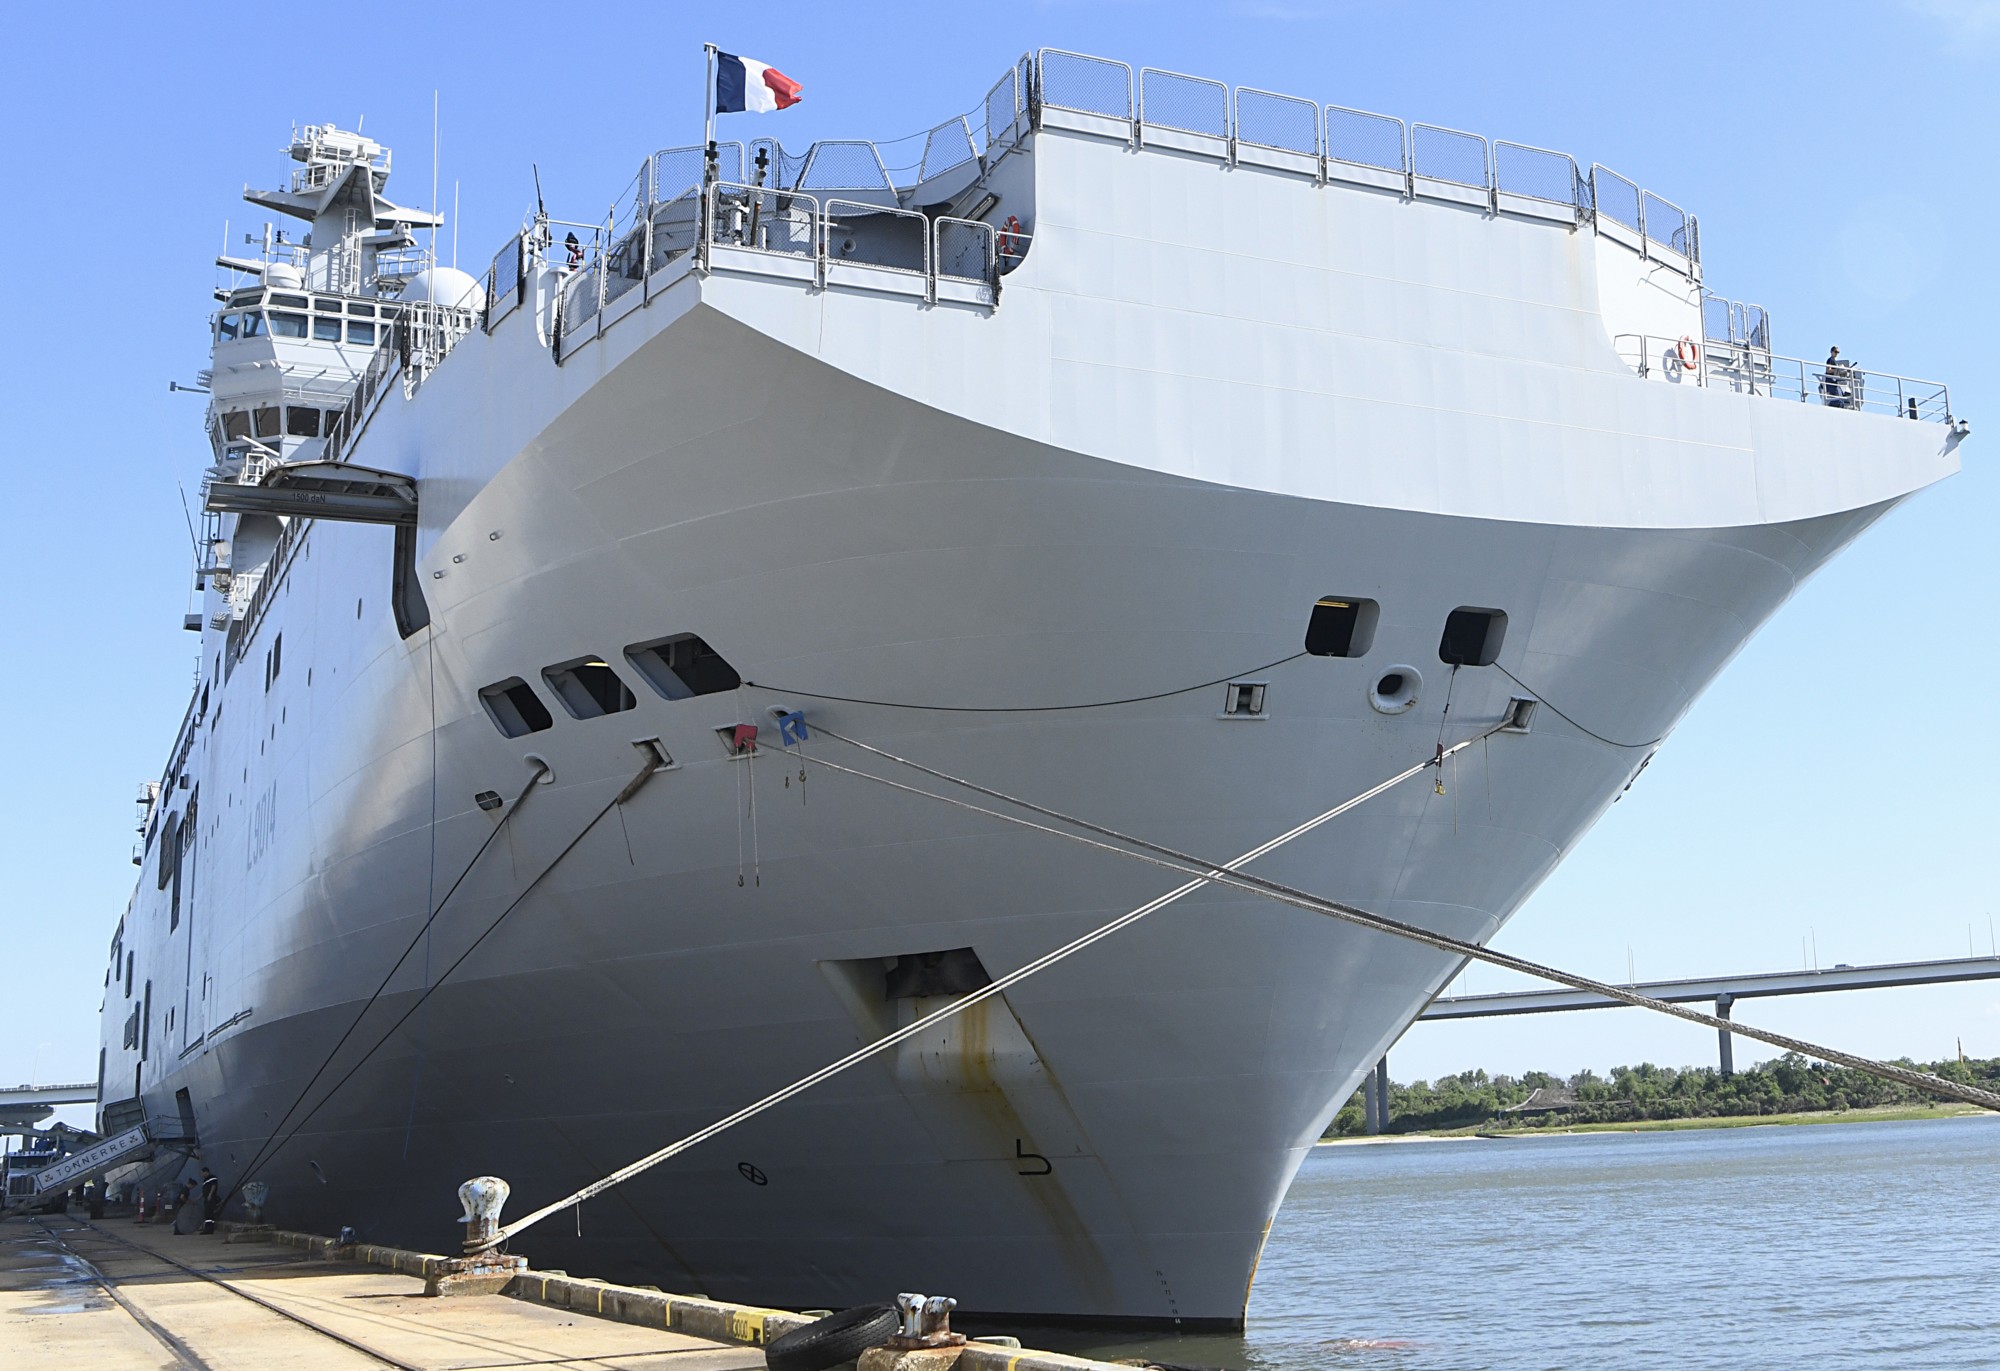 l-9014 fs tonnere mistral class amphibious assault command ship bpc french navy marine nationale 45